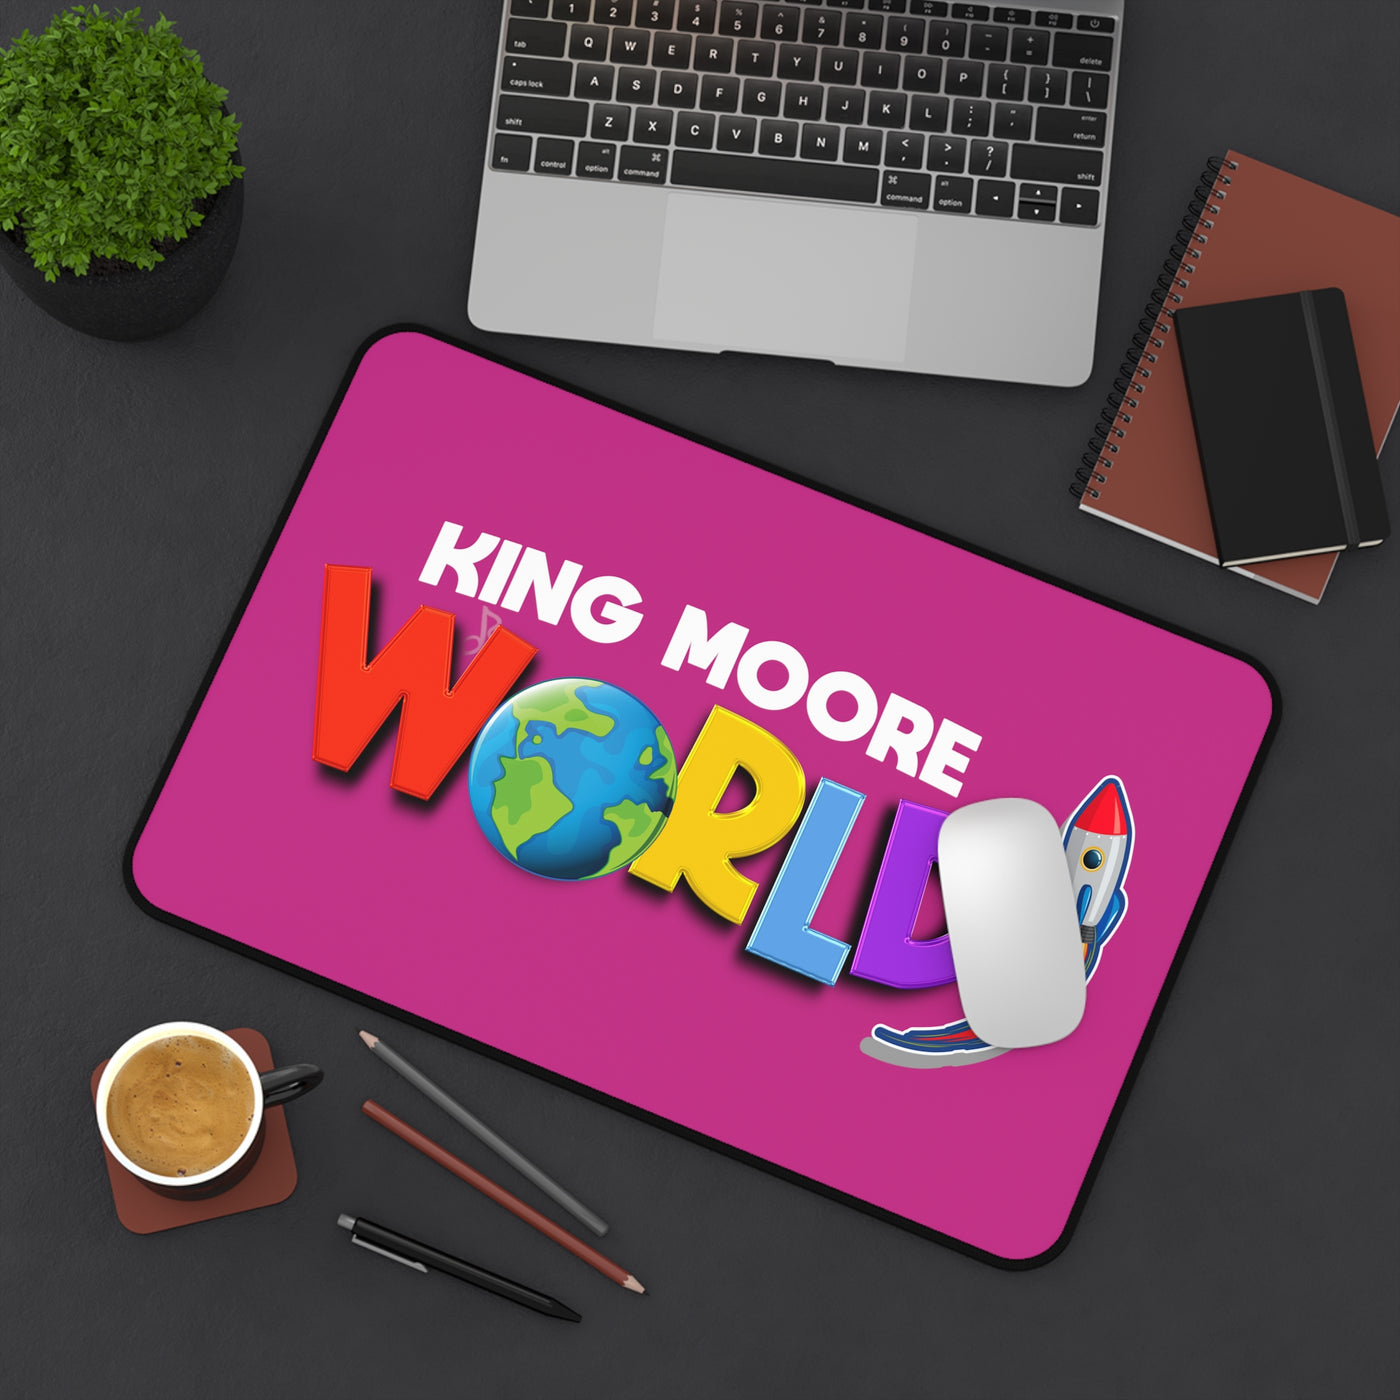 King Moore World Desk Mat (Pink)